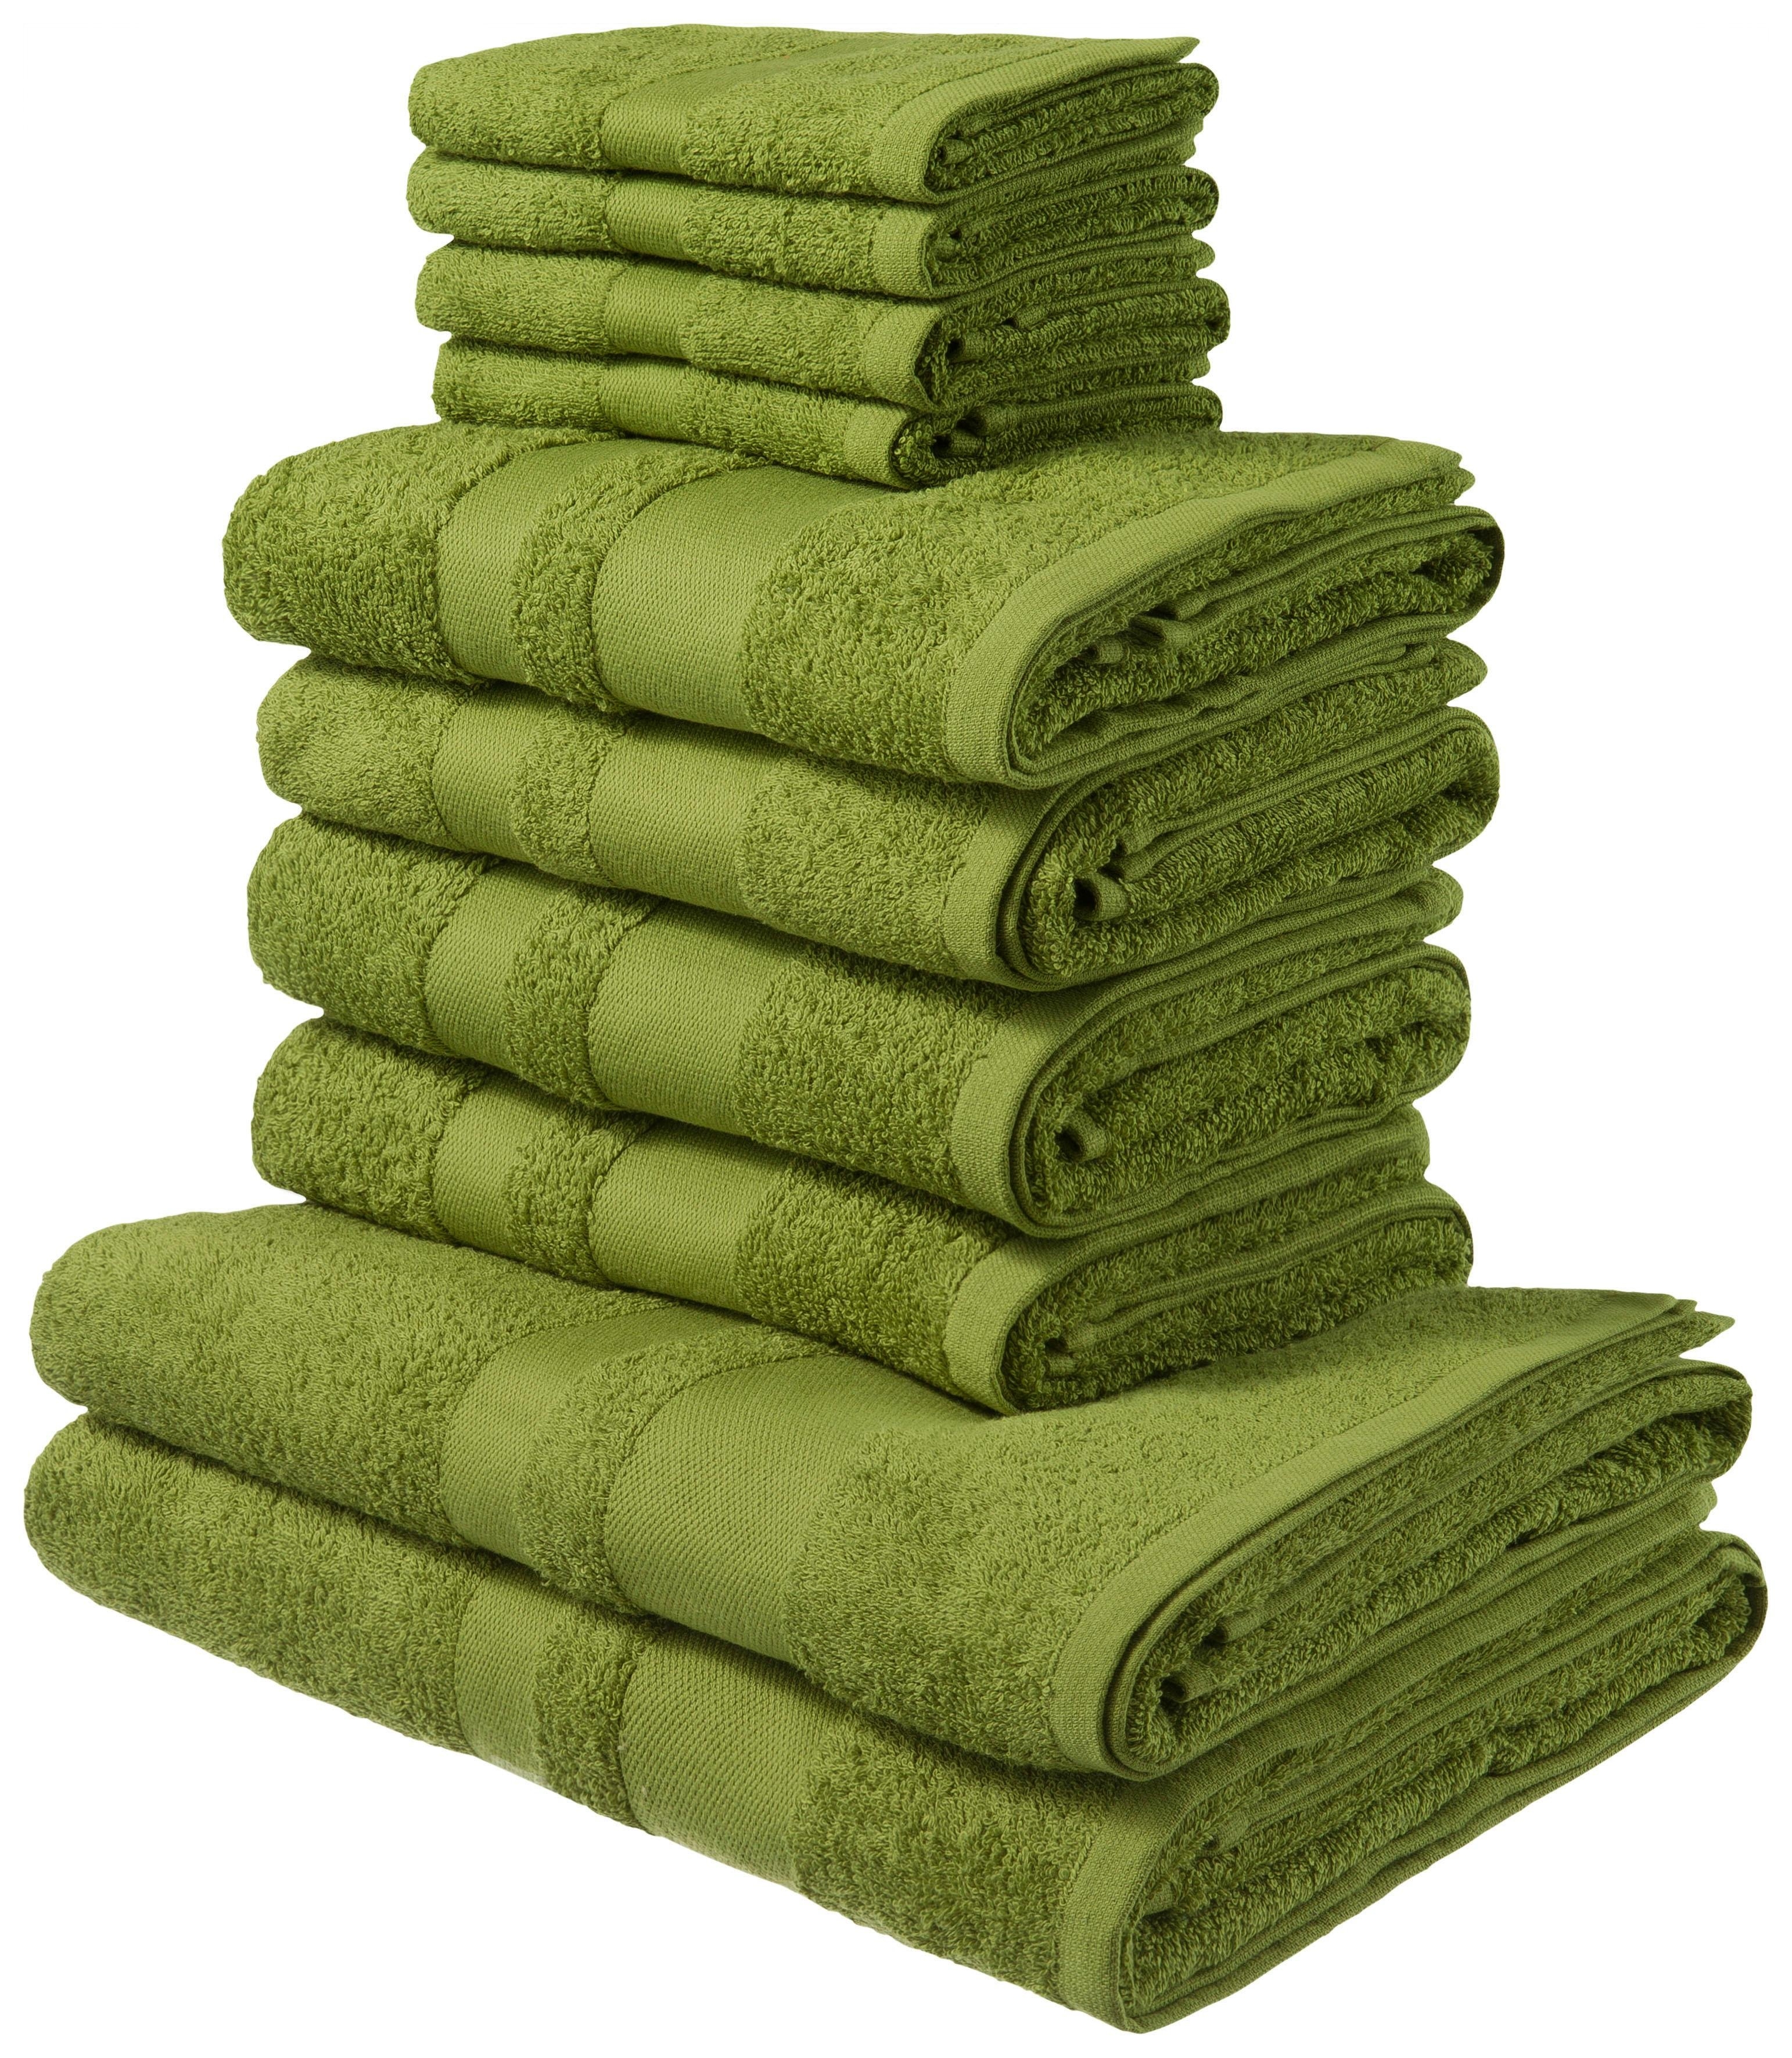 Home полотенца купить. Темно зеленое полотенце. Набор махровых полотенец. Полотенце my Home. Полотенце my Home Португалия.